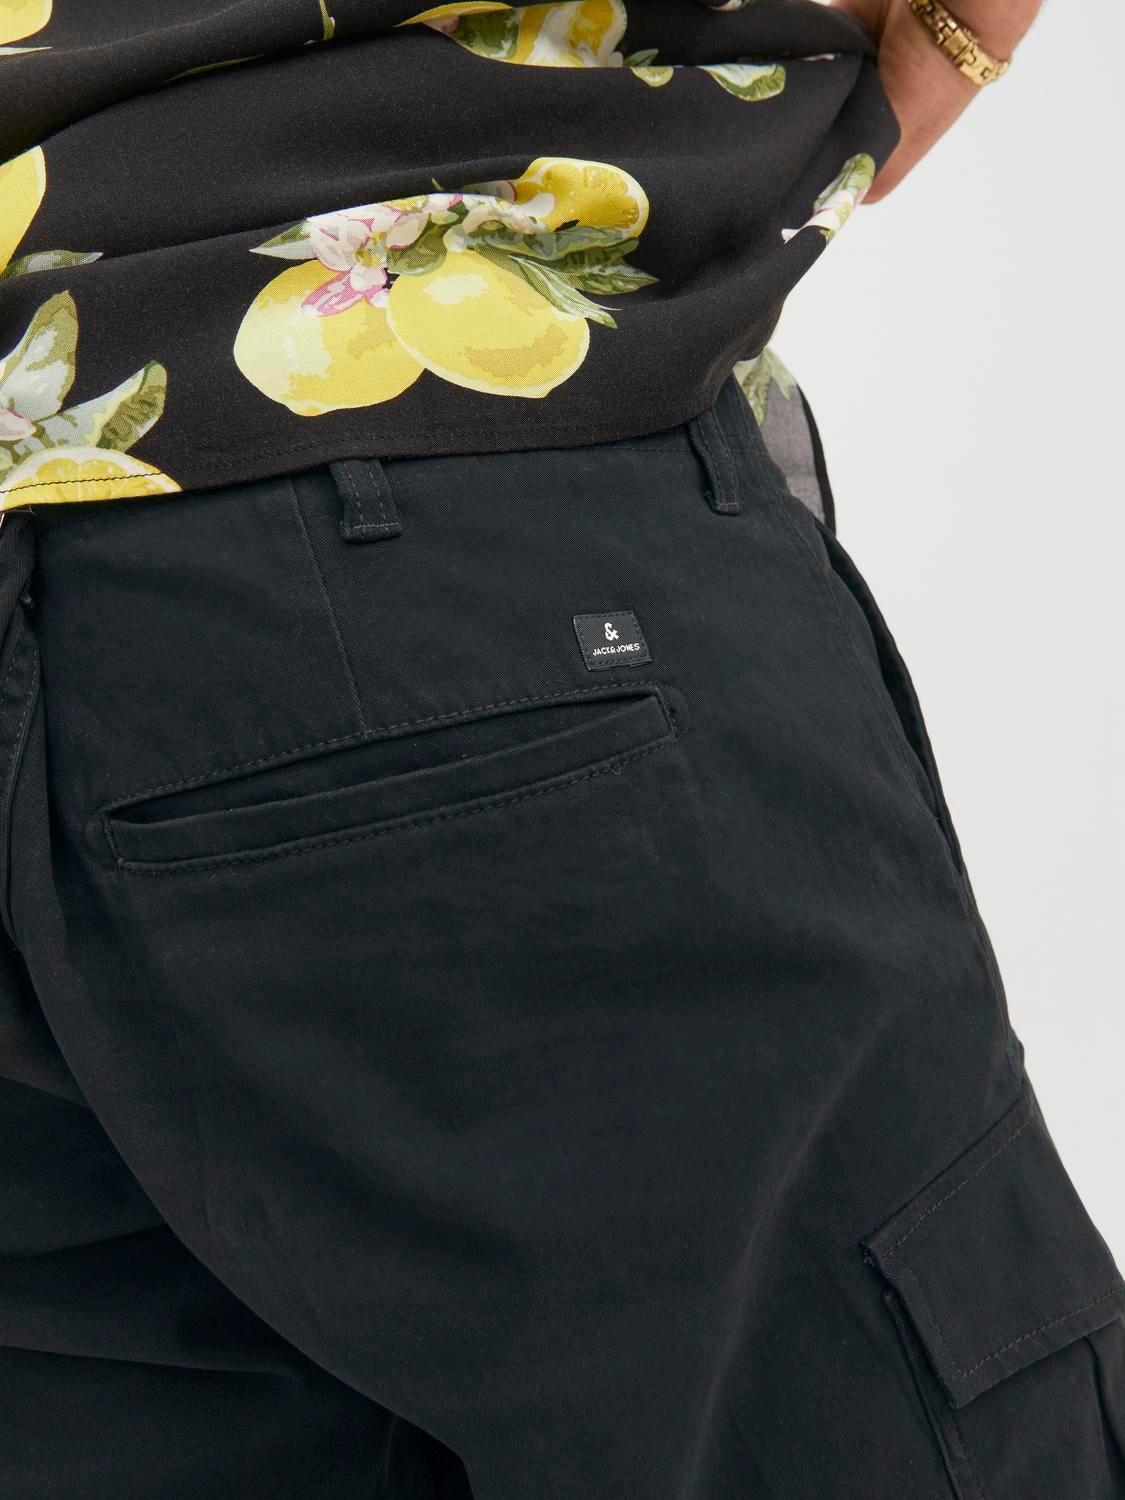 Jack & Jones Plus Size Regular Fit Cargo shorts -Black - 12232576